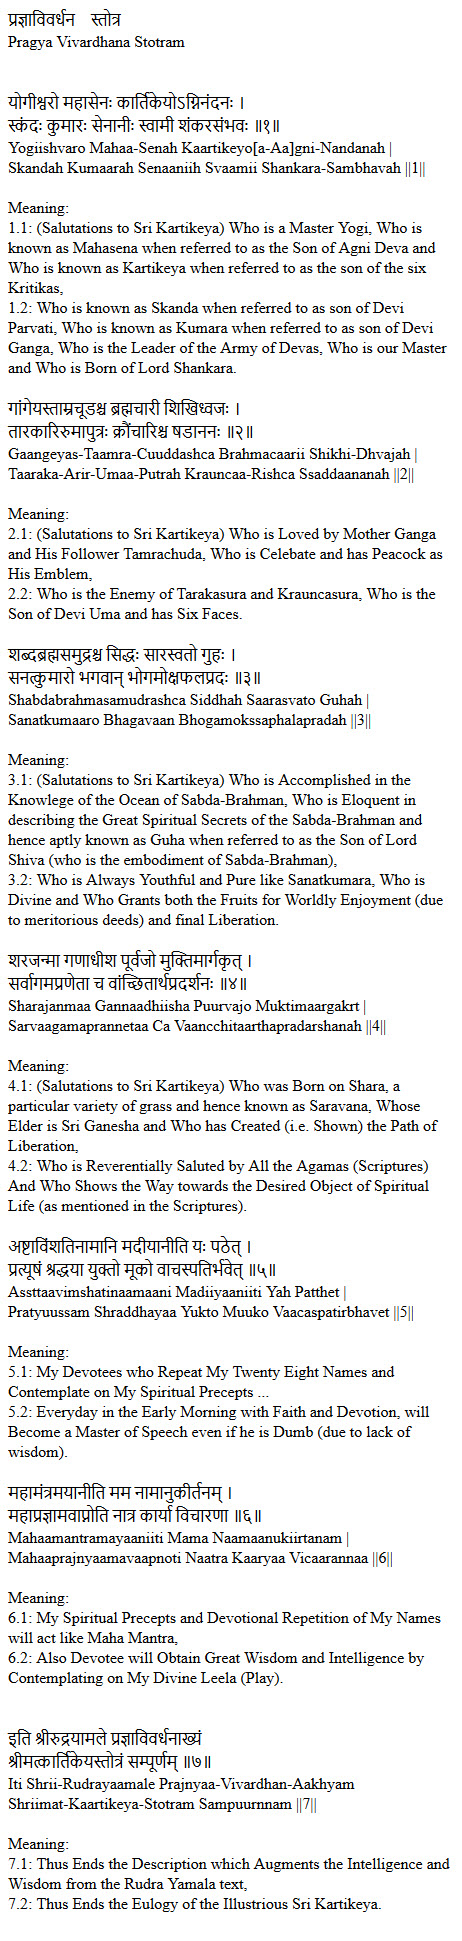 pradnya vivardhan stotra lyrics in sanskrit with english meaning